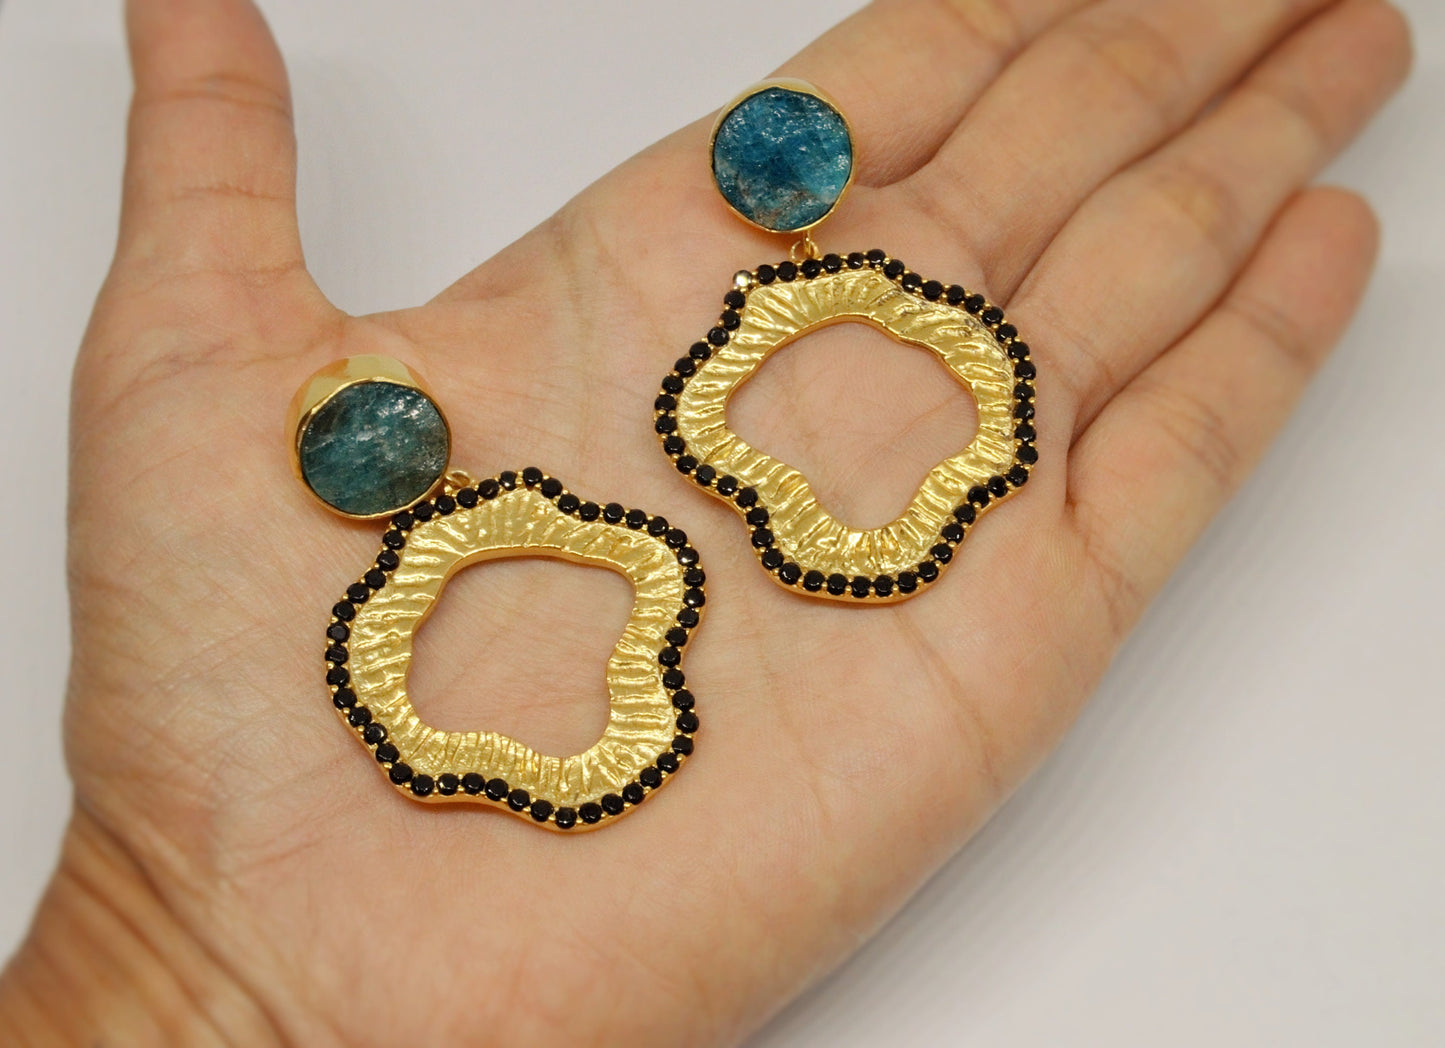 Blue Apatite Black Onyx Gold Earrings, Unique Gemstone Earrings, Dainty Statement Earrings, Gift For Her, Indian Jewelry